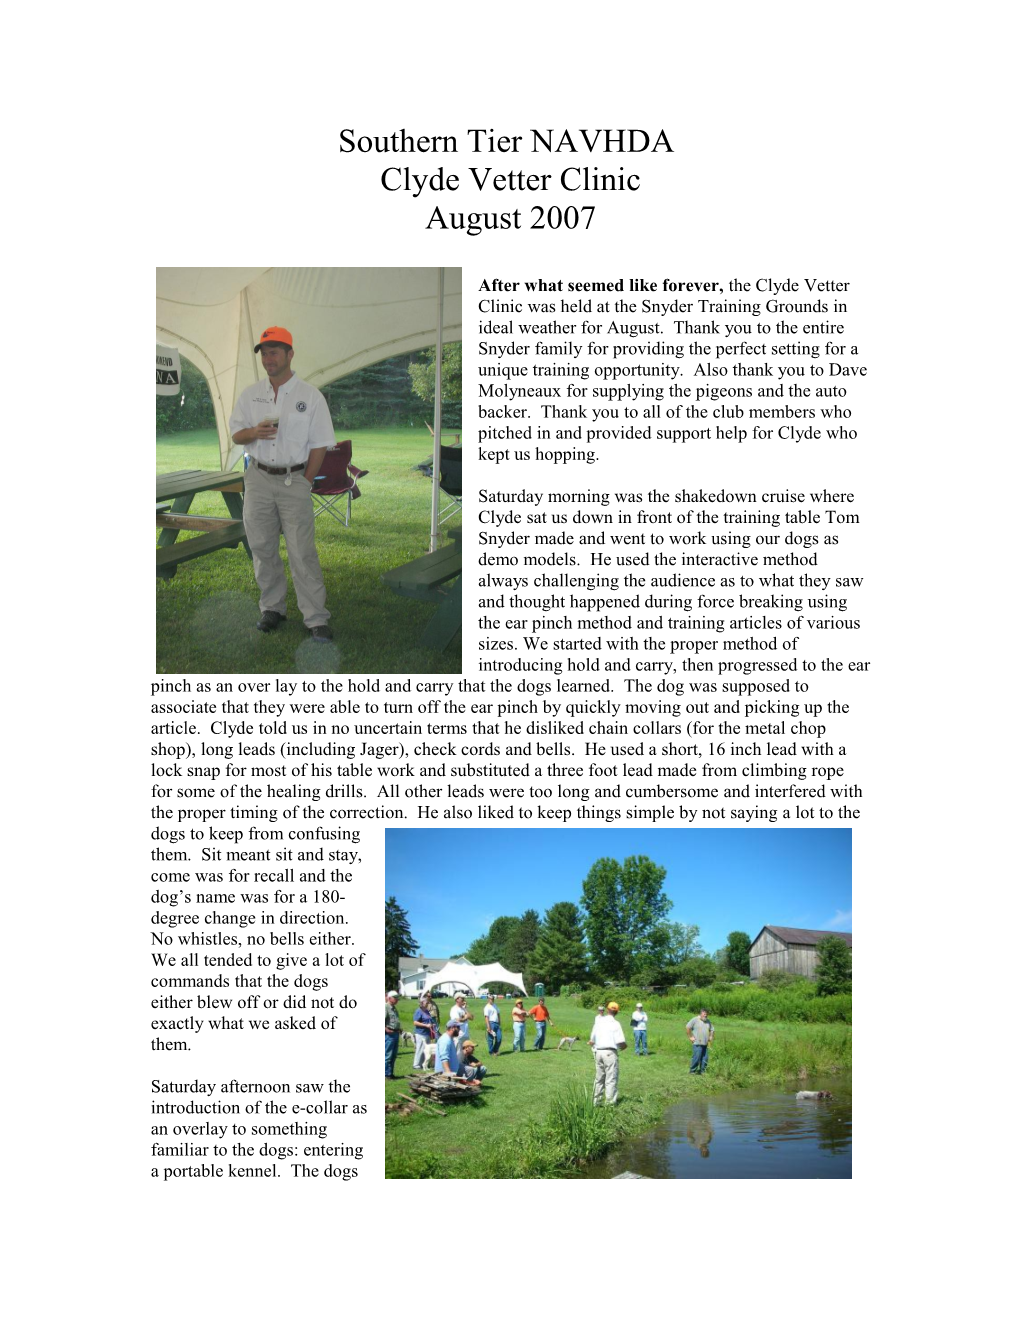 Clyde Vetter Clinic